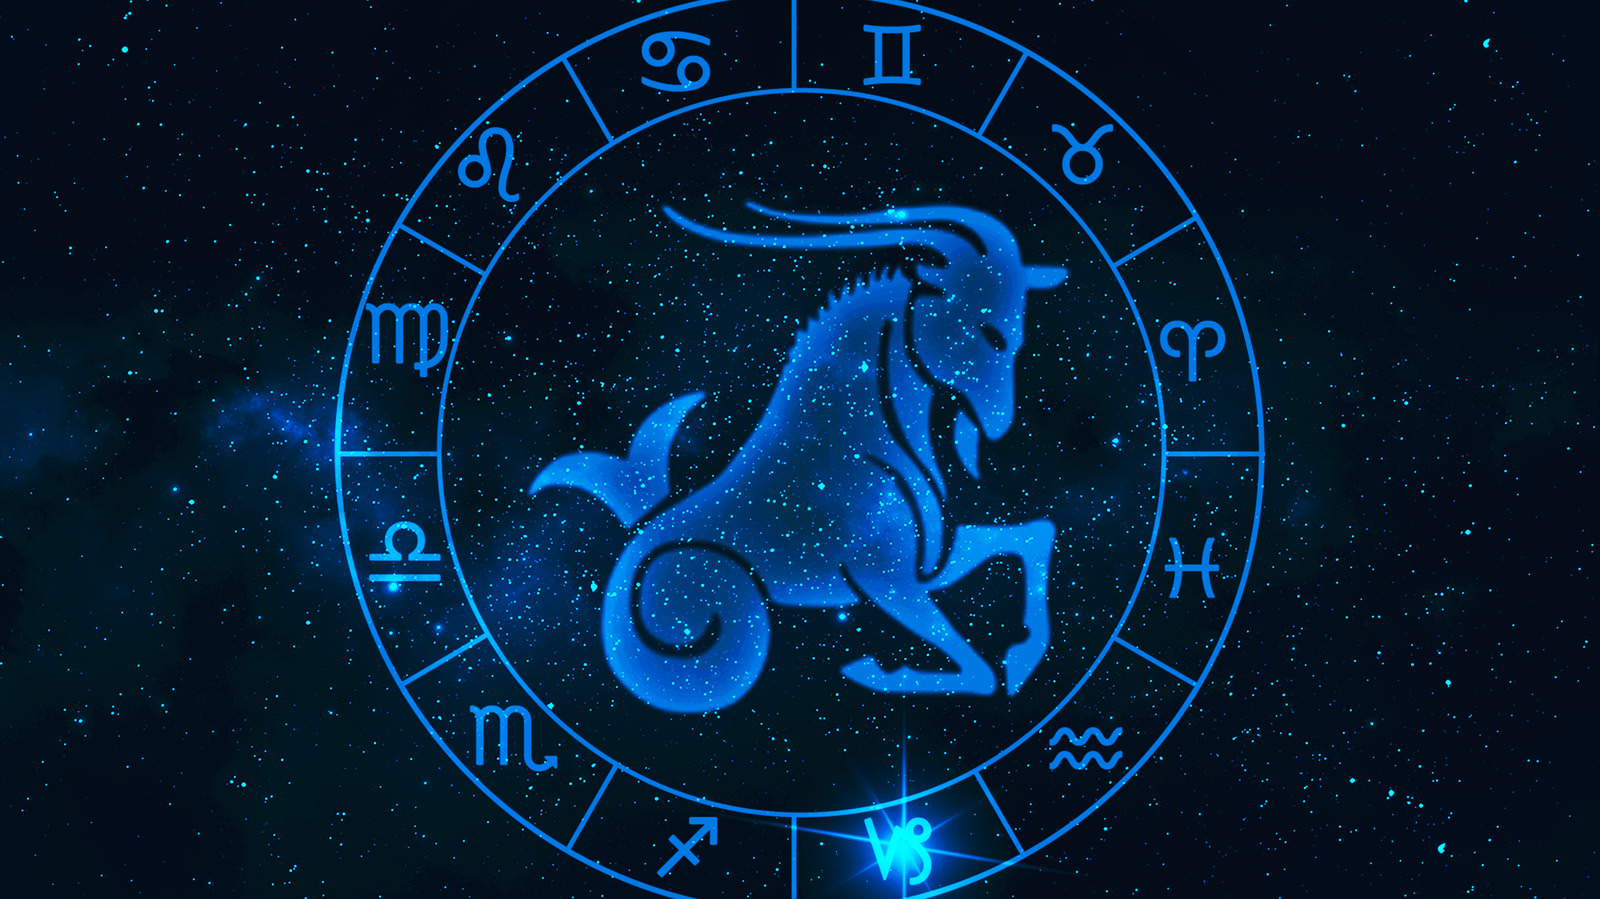 Capricorn symbol